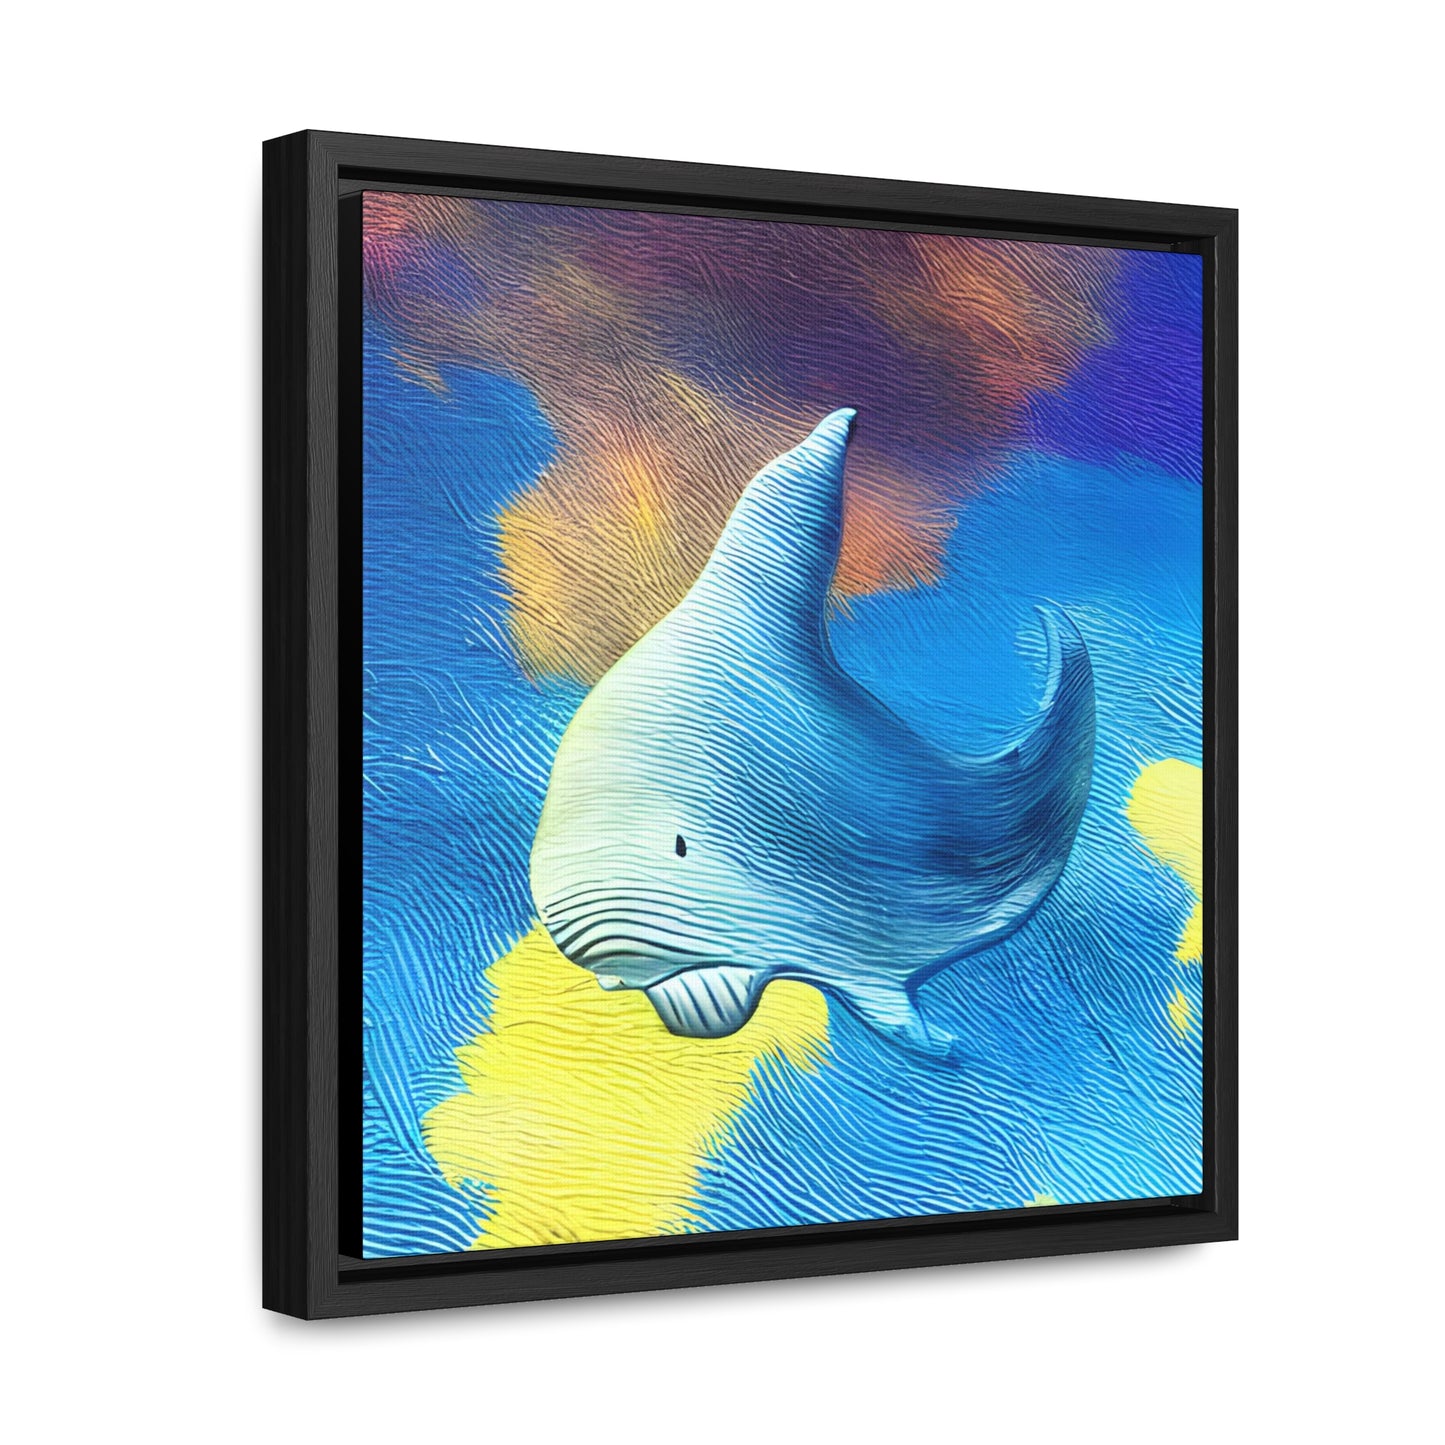 Whale Sky - Framed Gallery Canvas